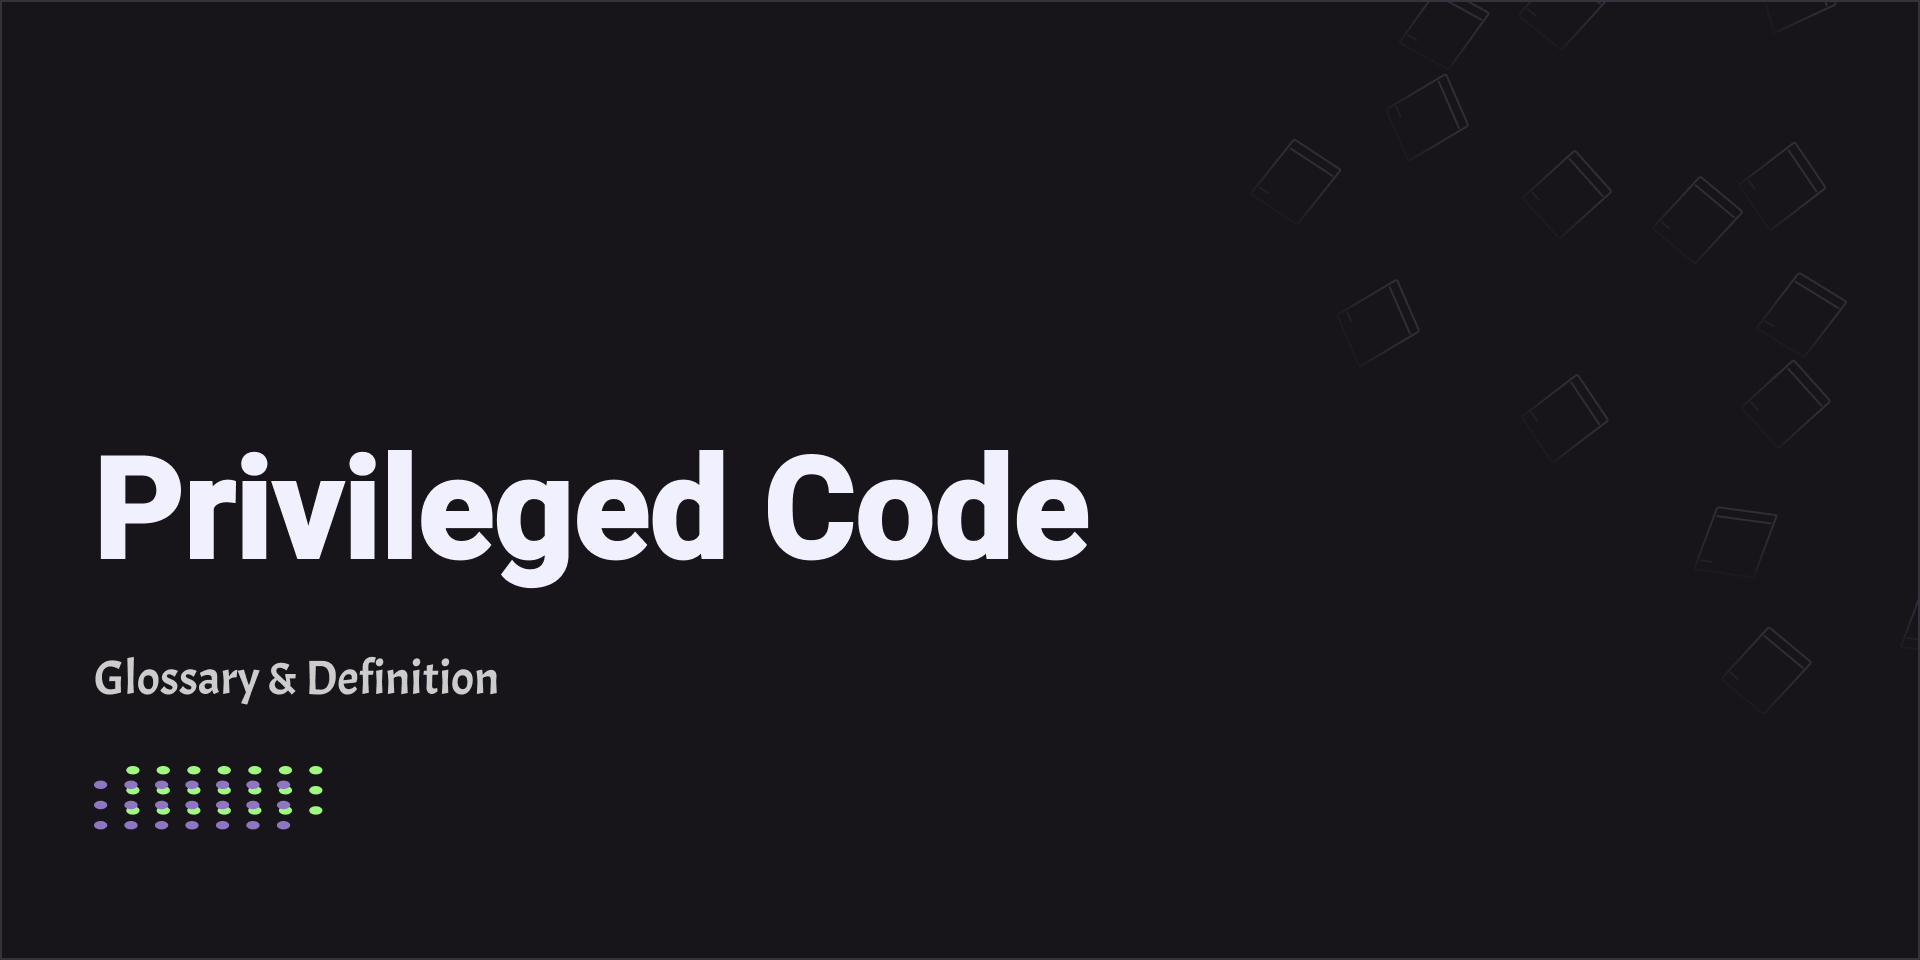 Privileged Code